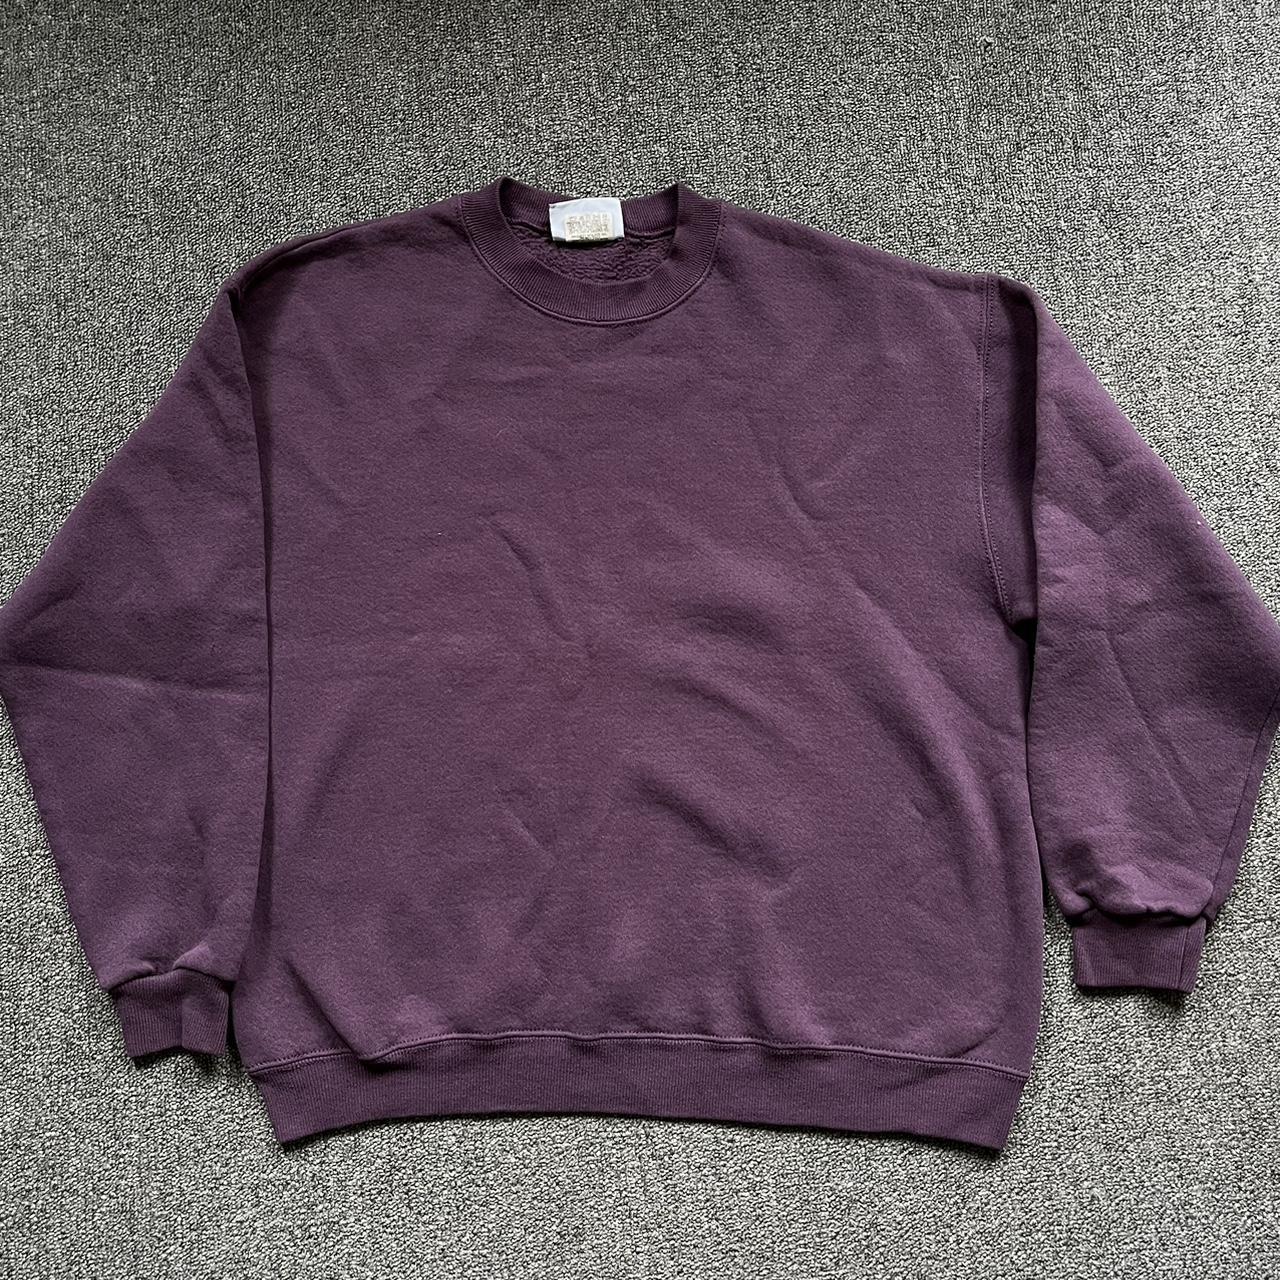 Purple Heavyweight Lee Blank Crewneck sweater :-) - Depop